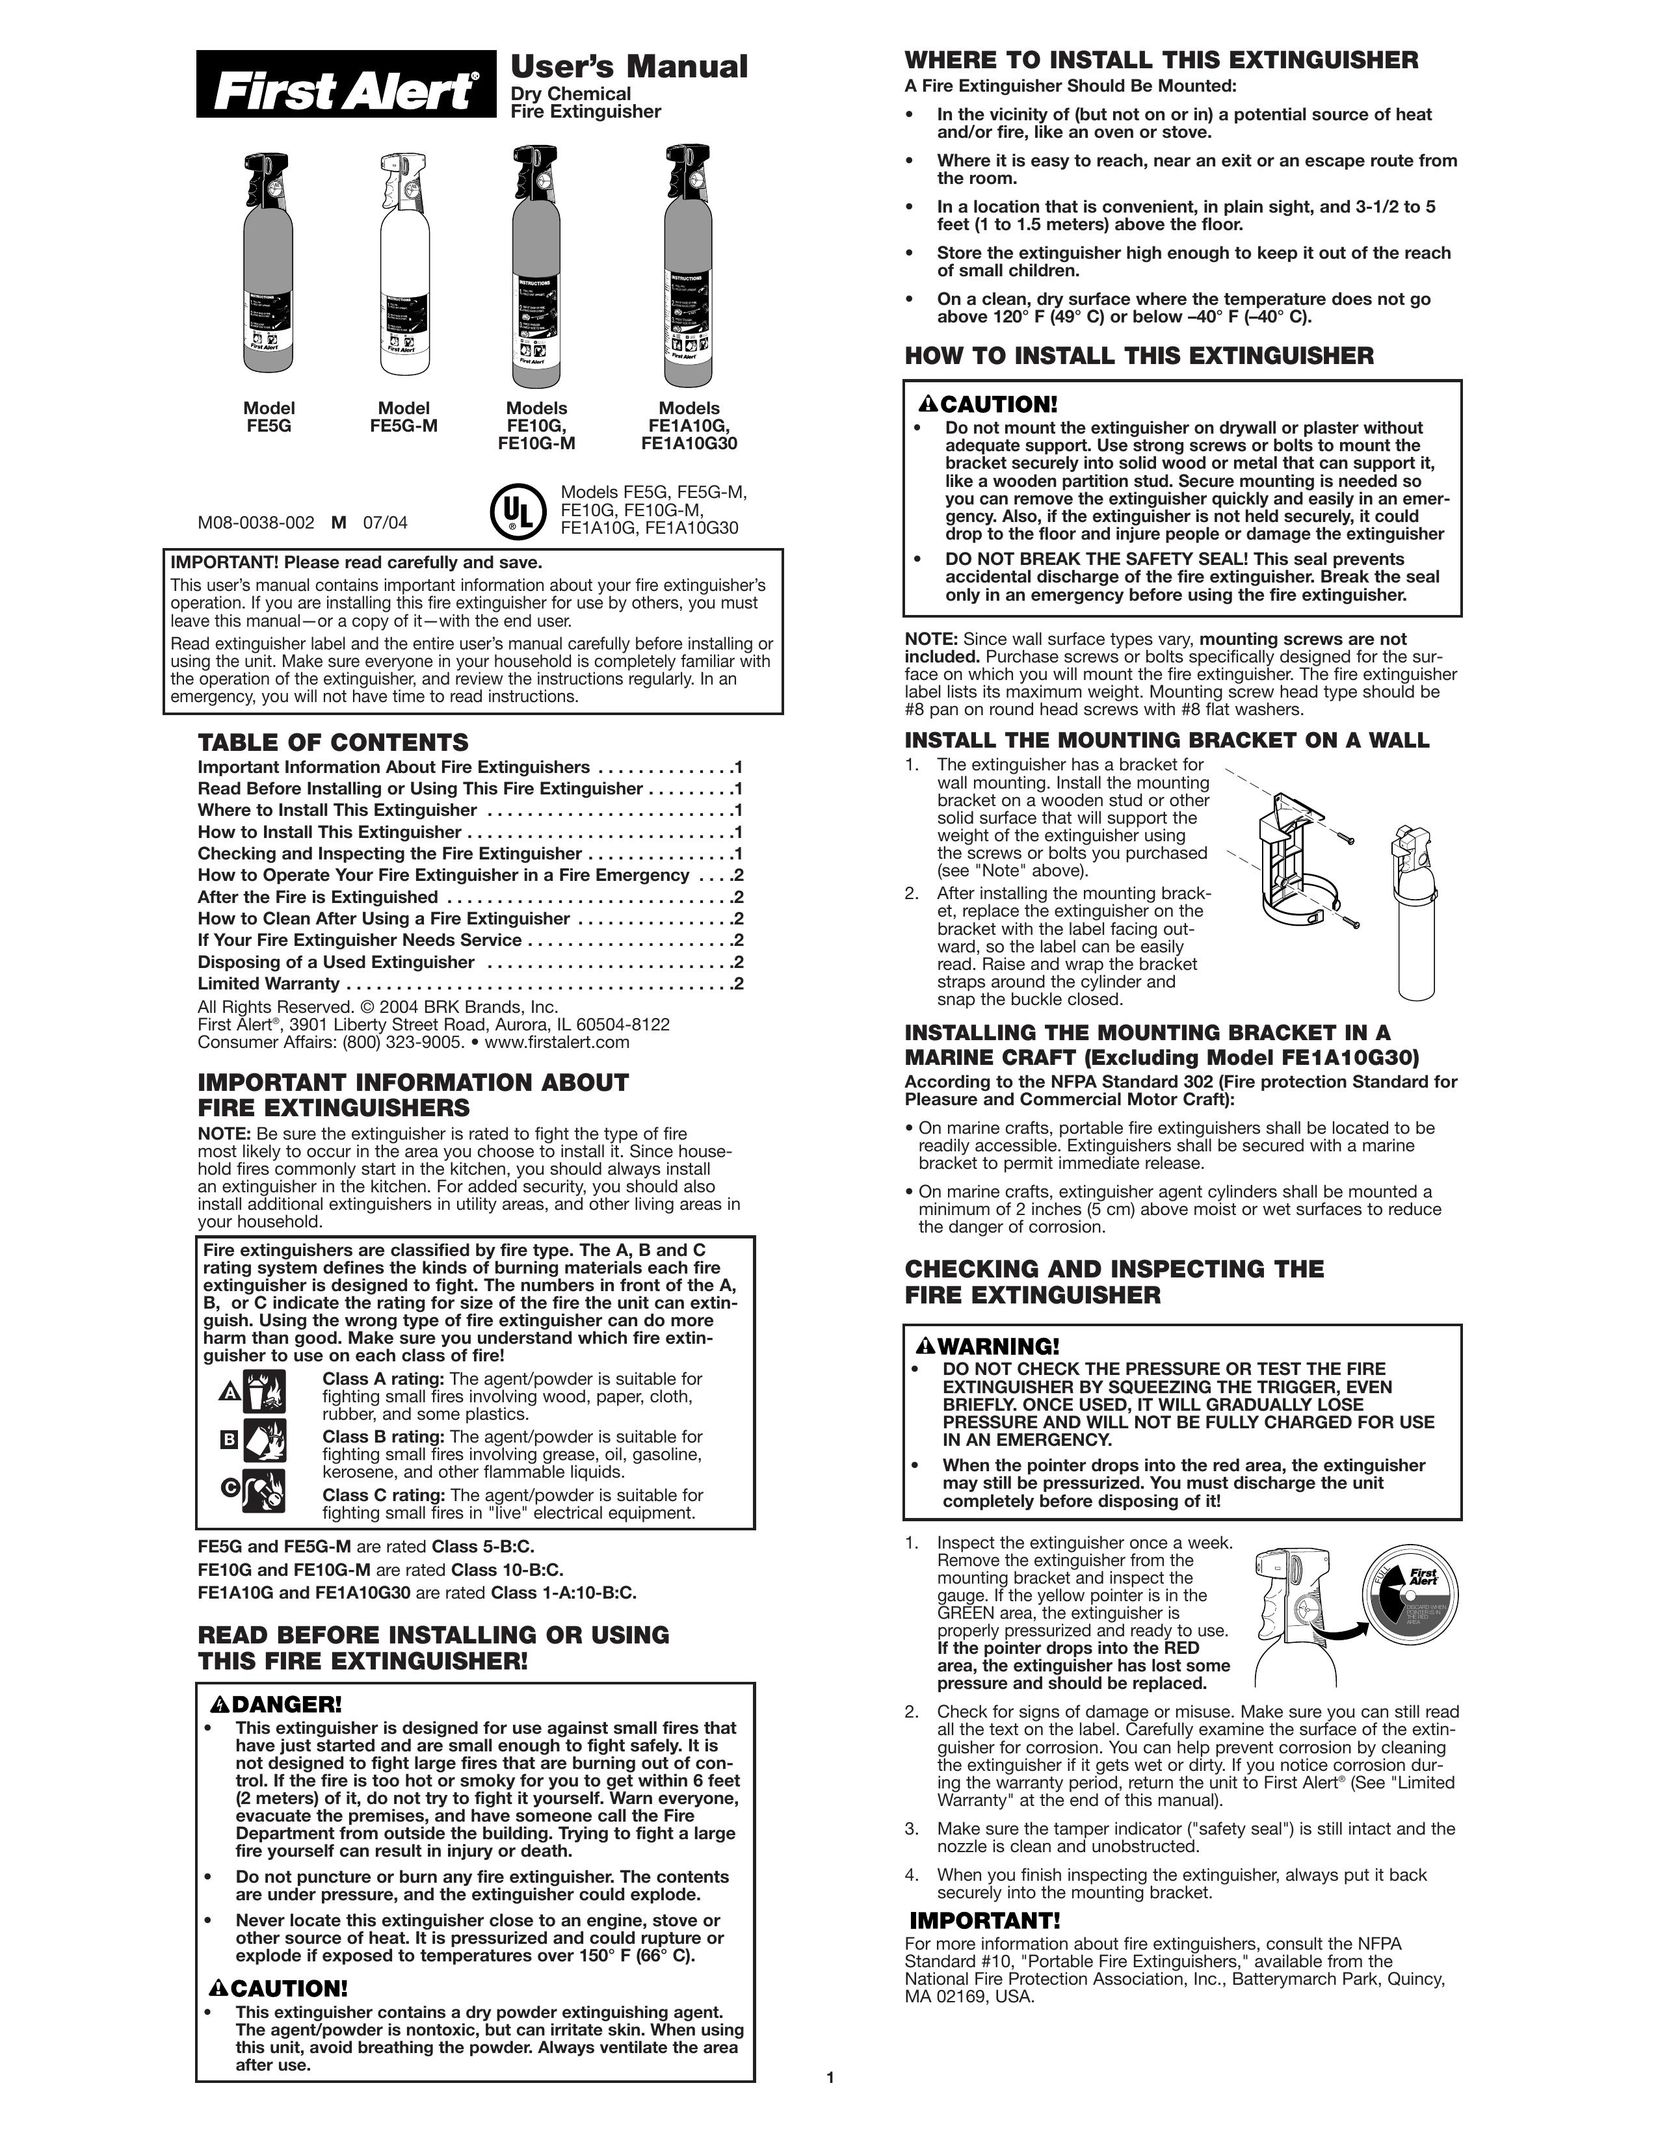 First Alert FE5G-M Fire Extinguisher User Manual